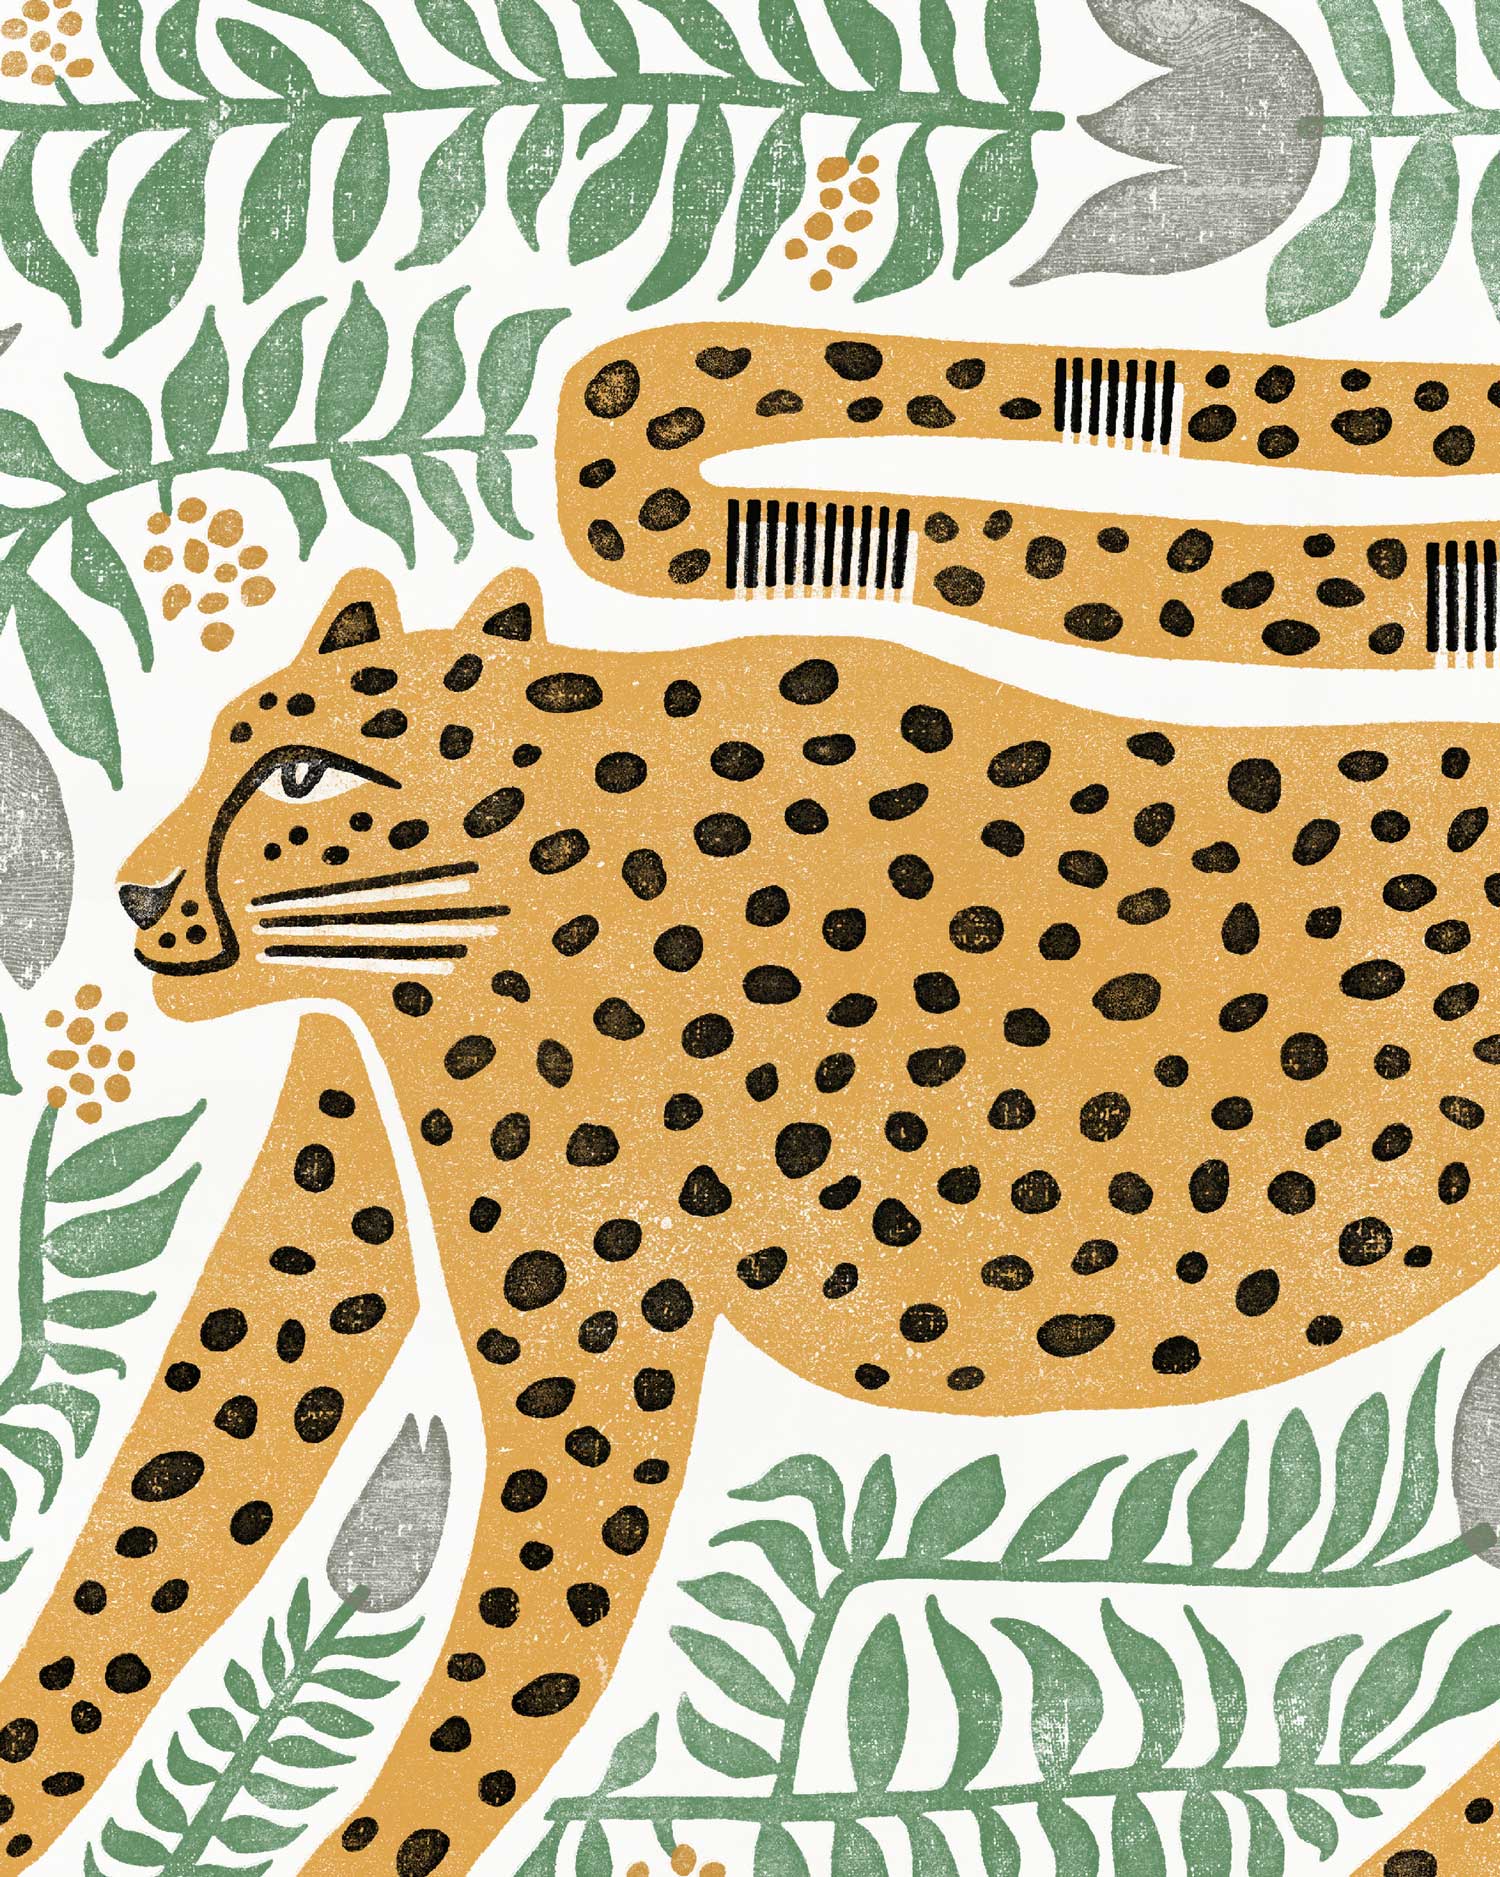 Spotted Cheetah Art Print